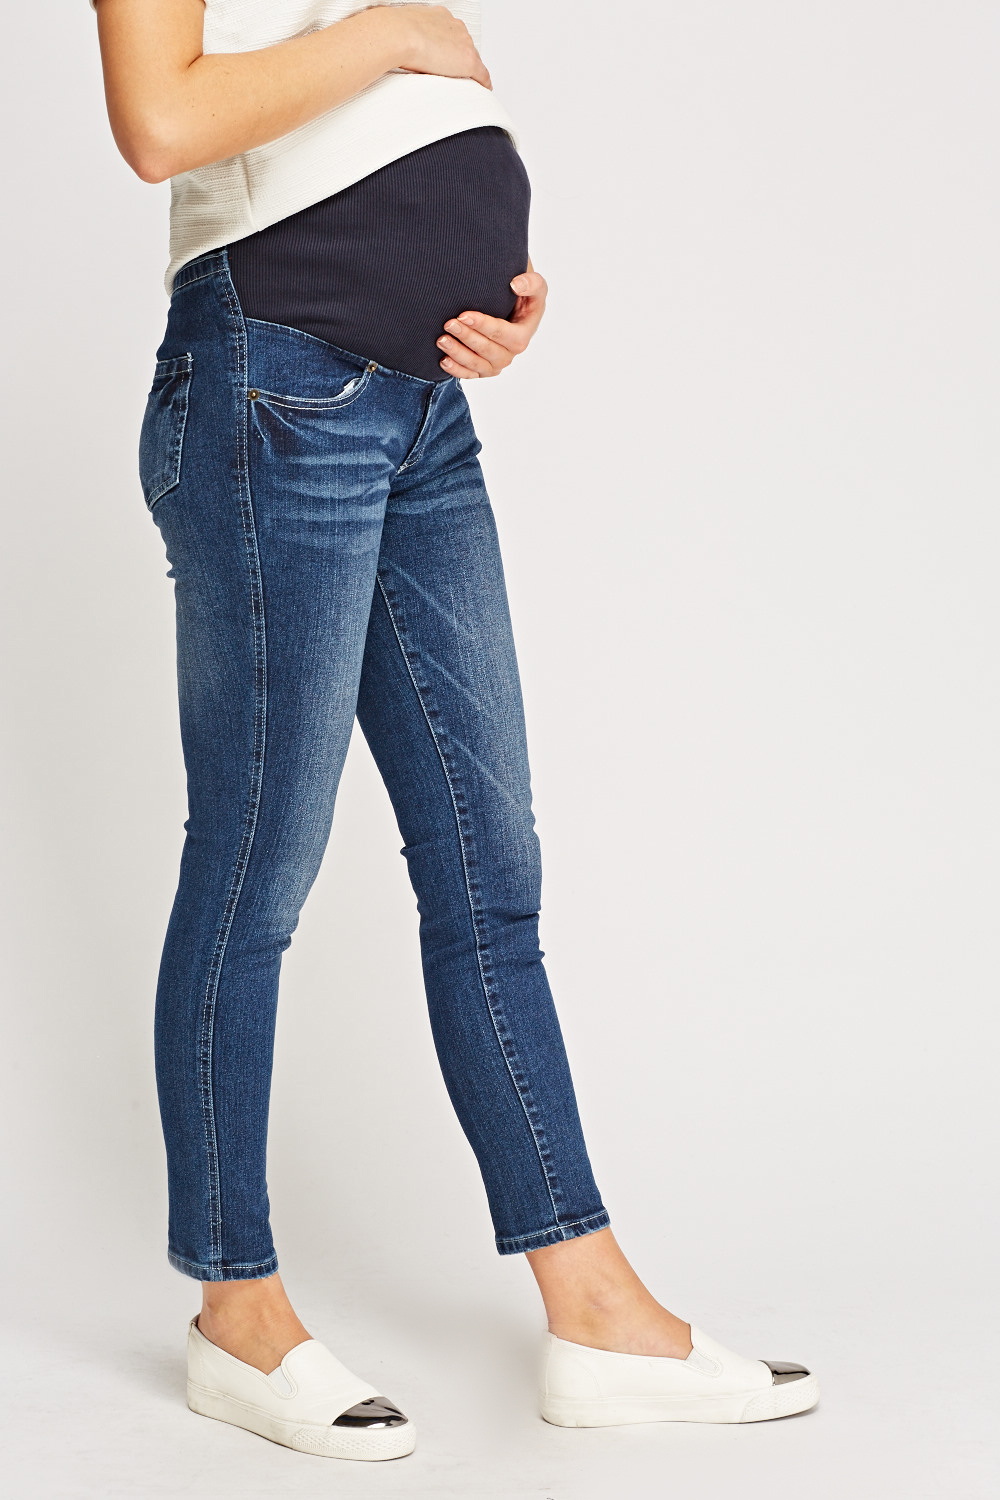 Maternity Denim Jeans - Just $7